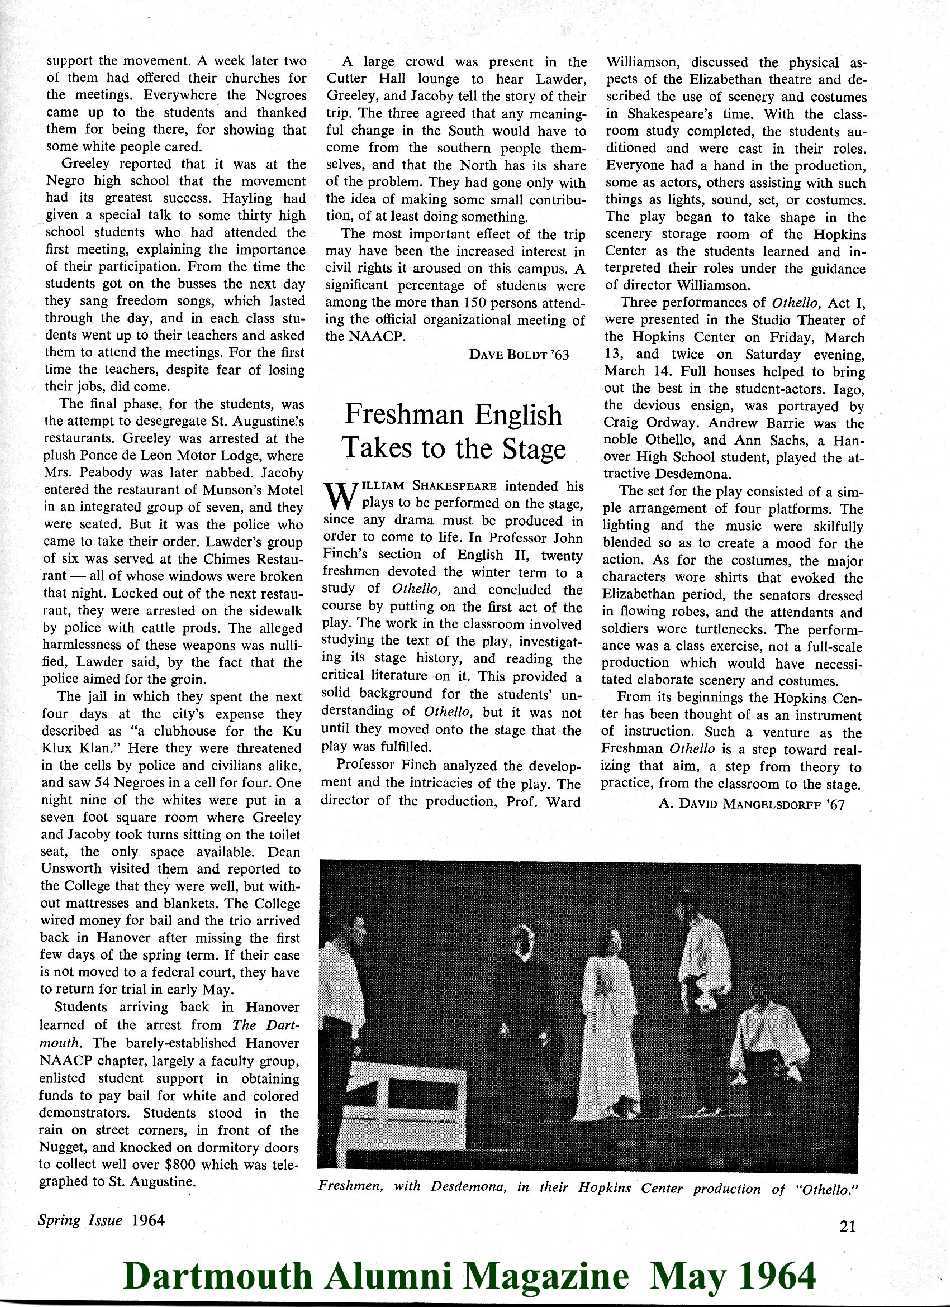 Dartmouth Alumni Magazine: May 1964 